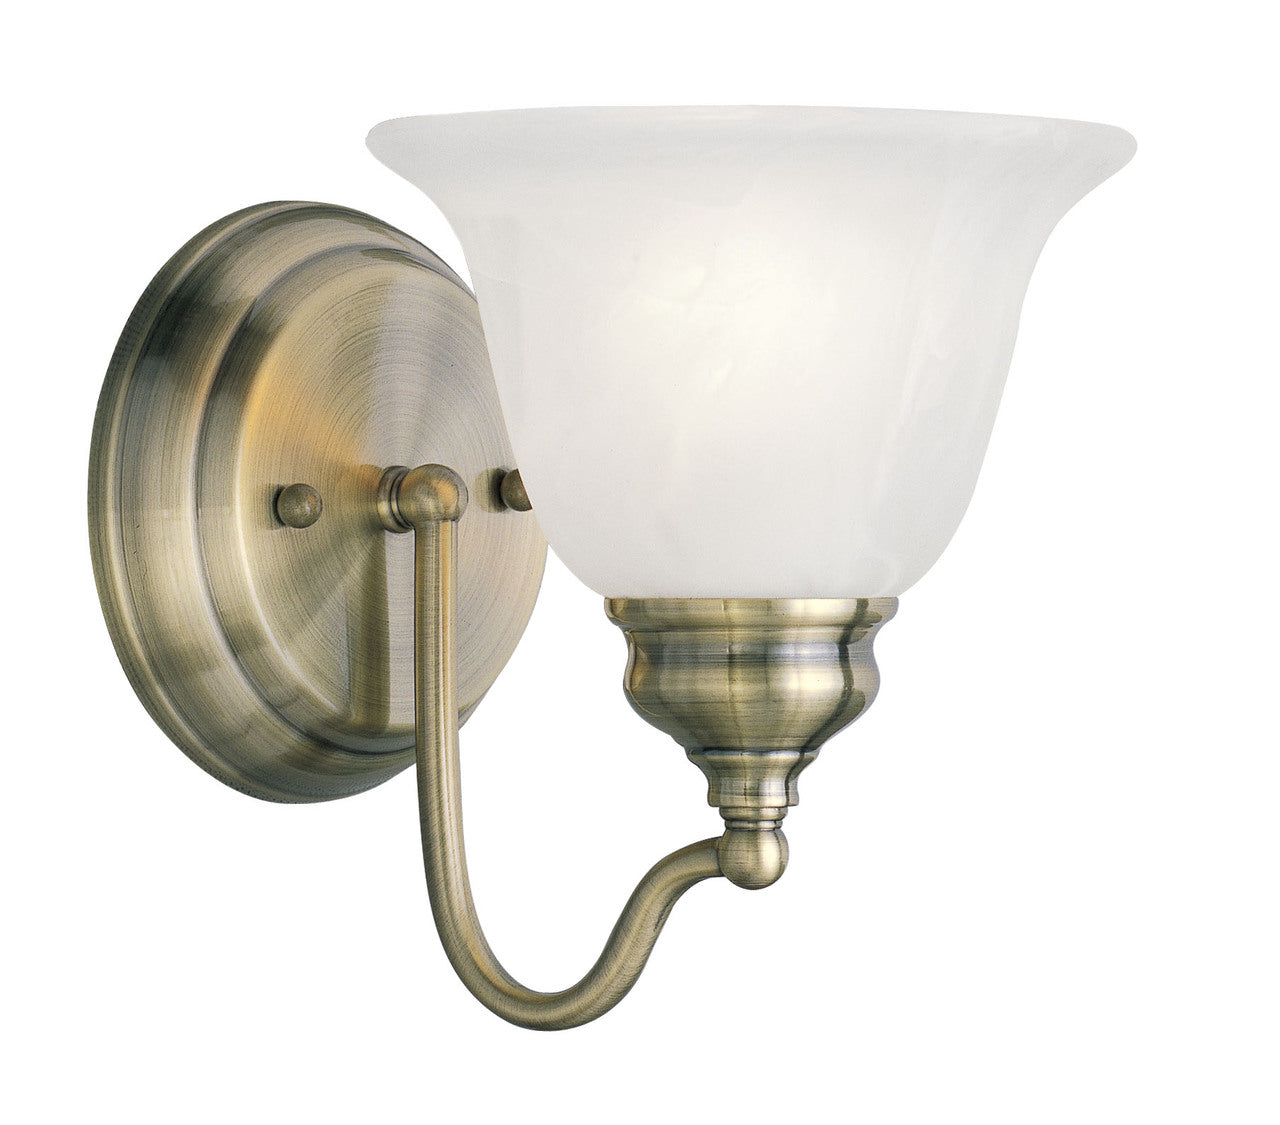 LIVEX Lighting 1351-01 Essex Bath Light in Antique Brass (1 Light)